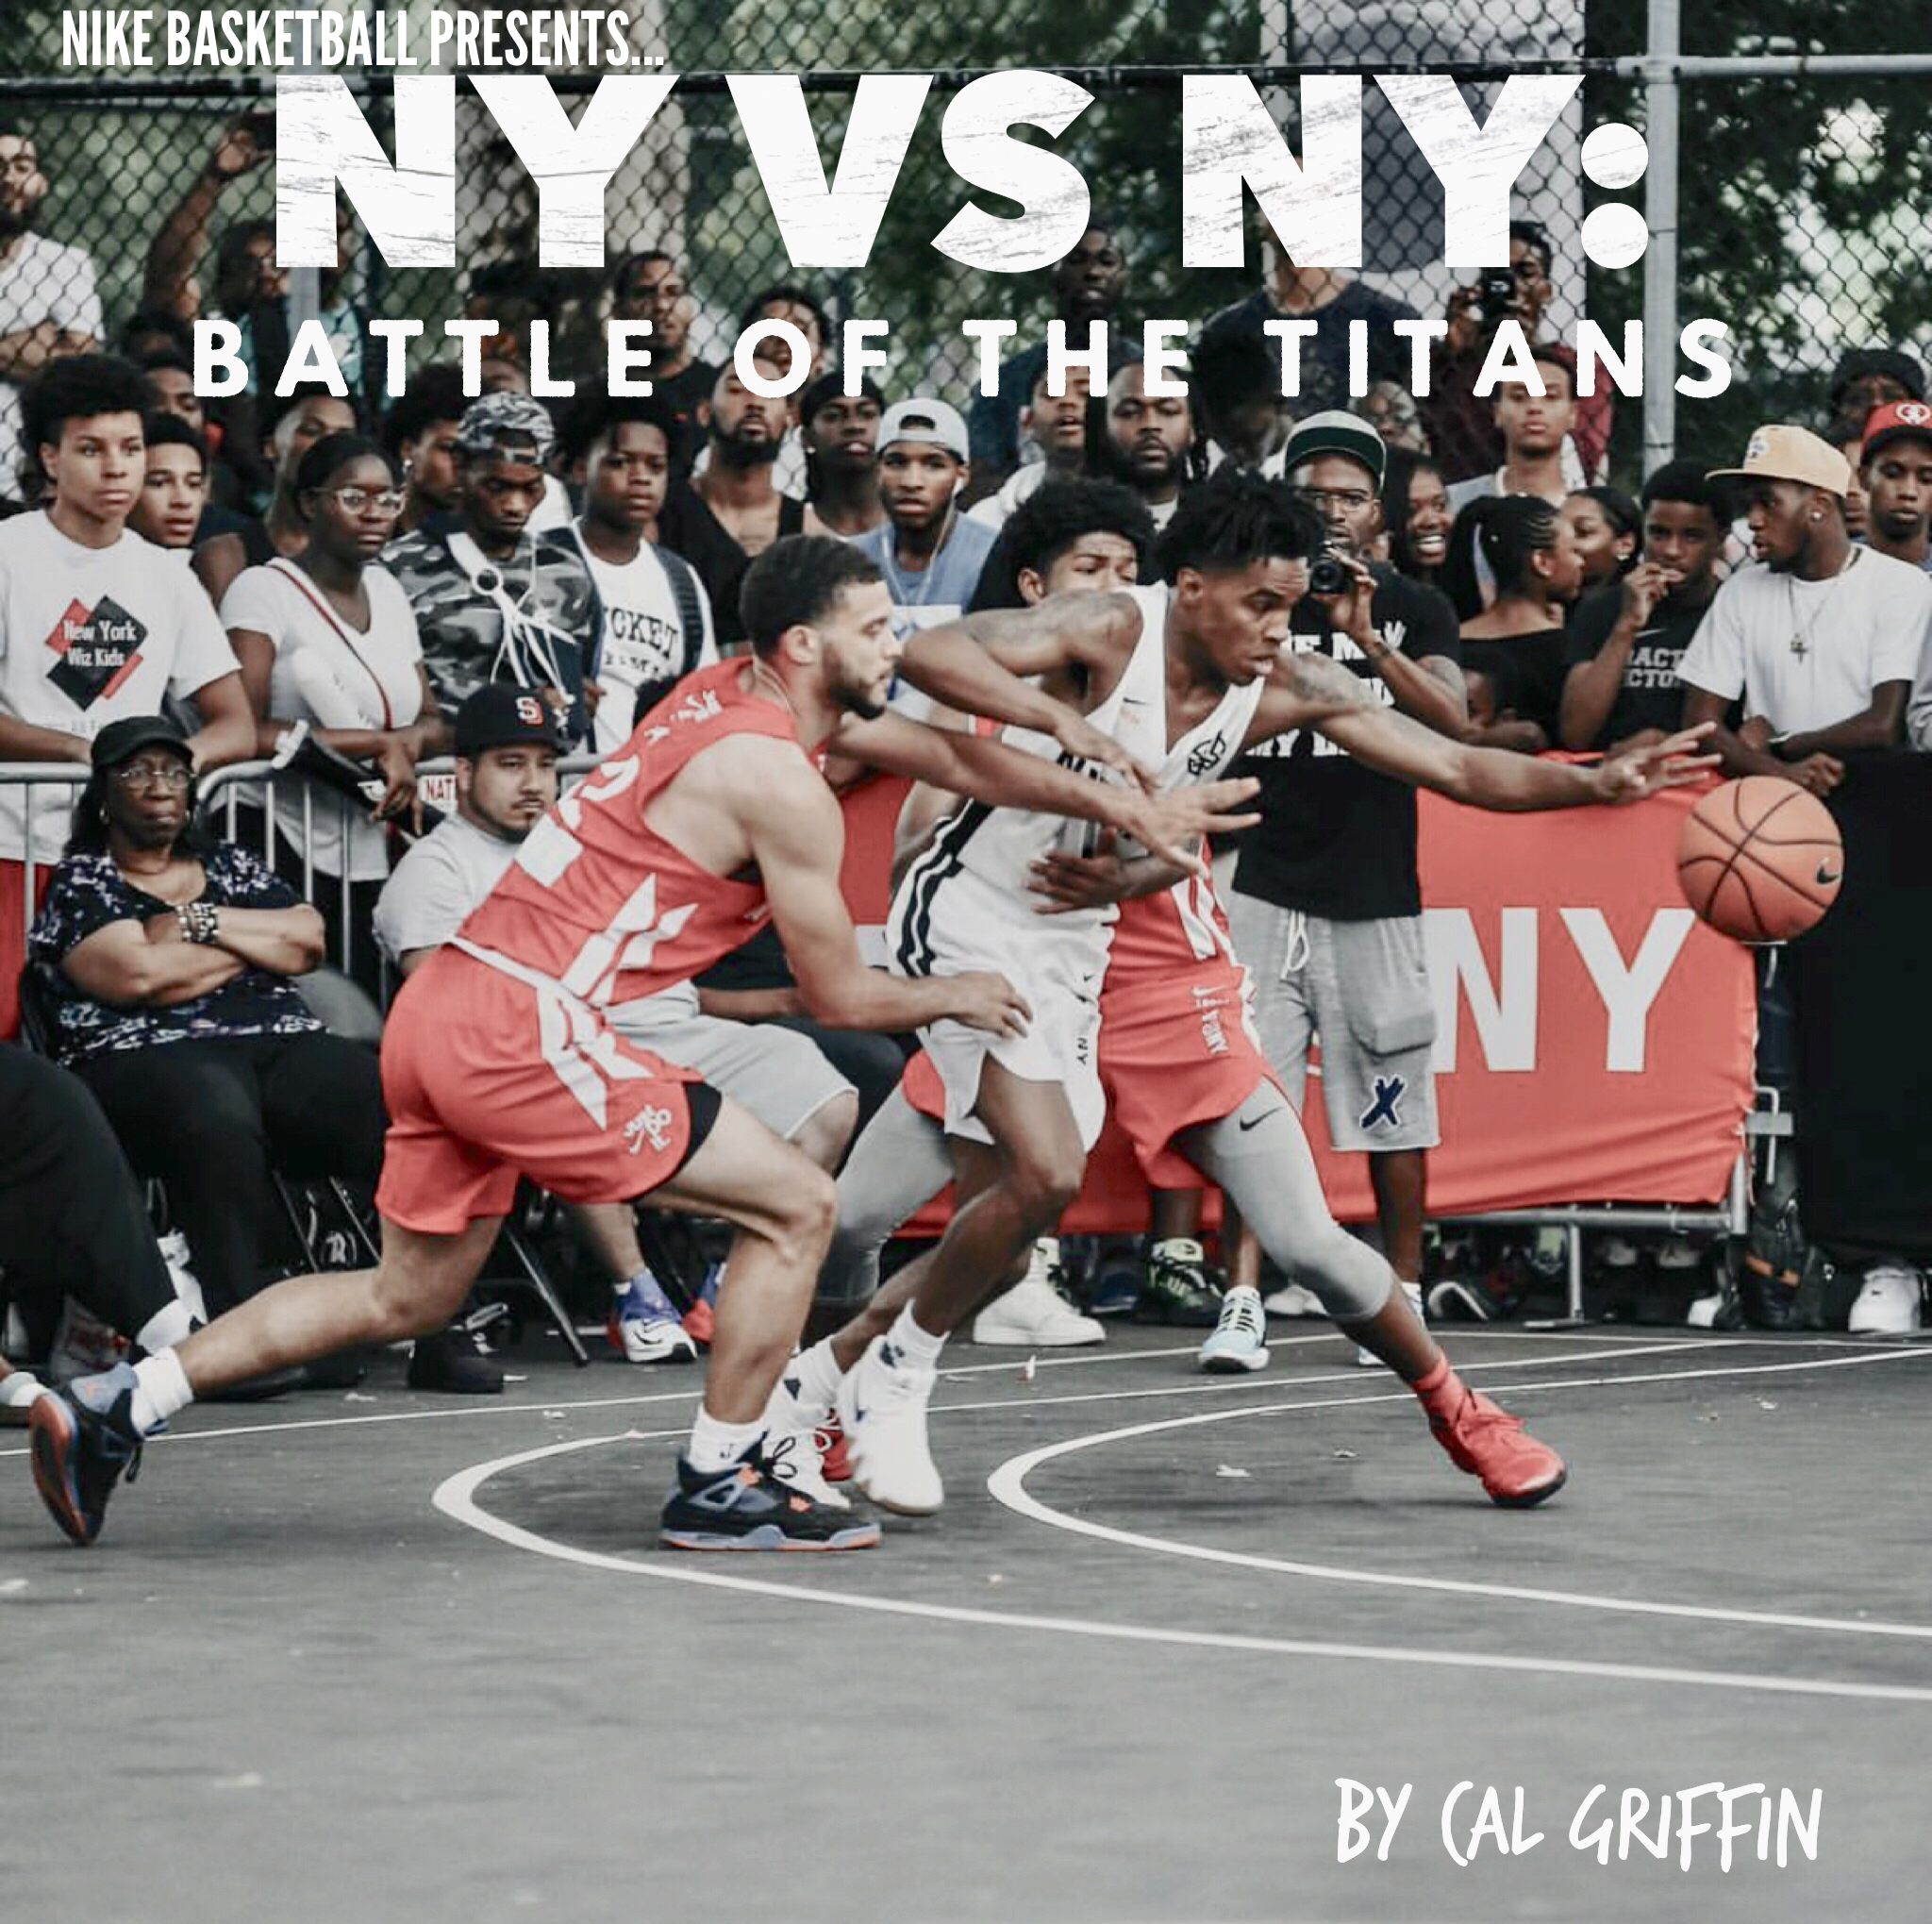 NIKE and new york sunshine celebrate NYC's basketball heritage